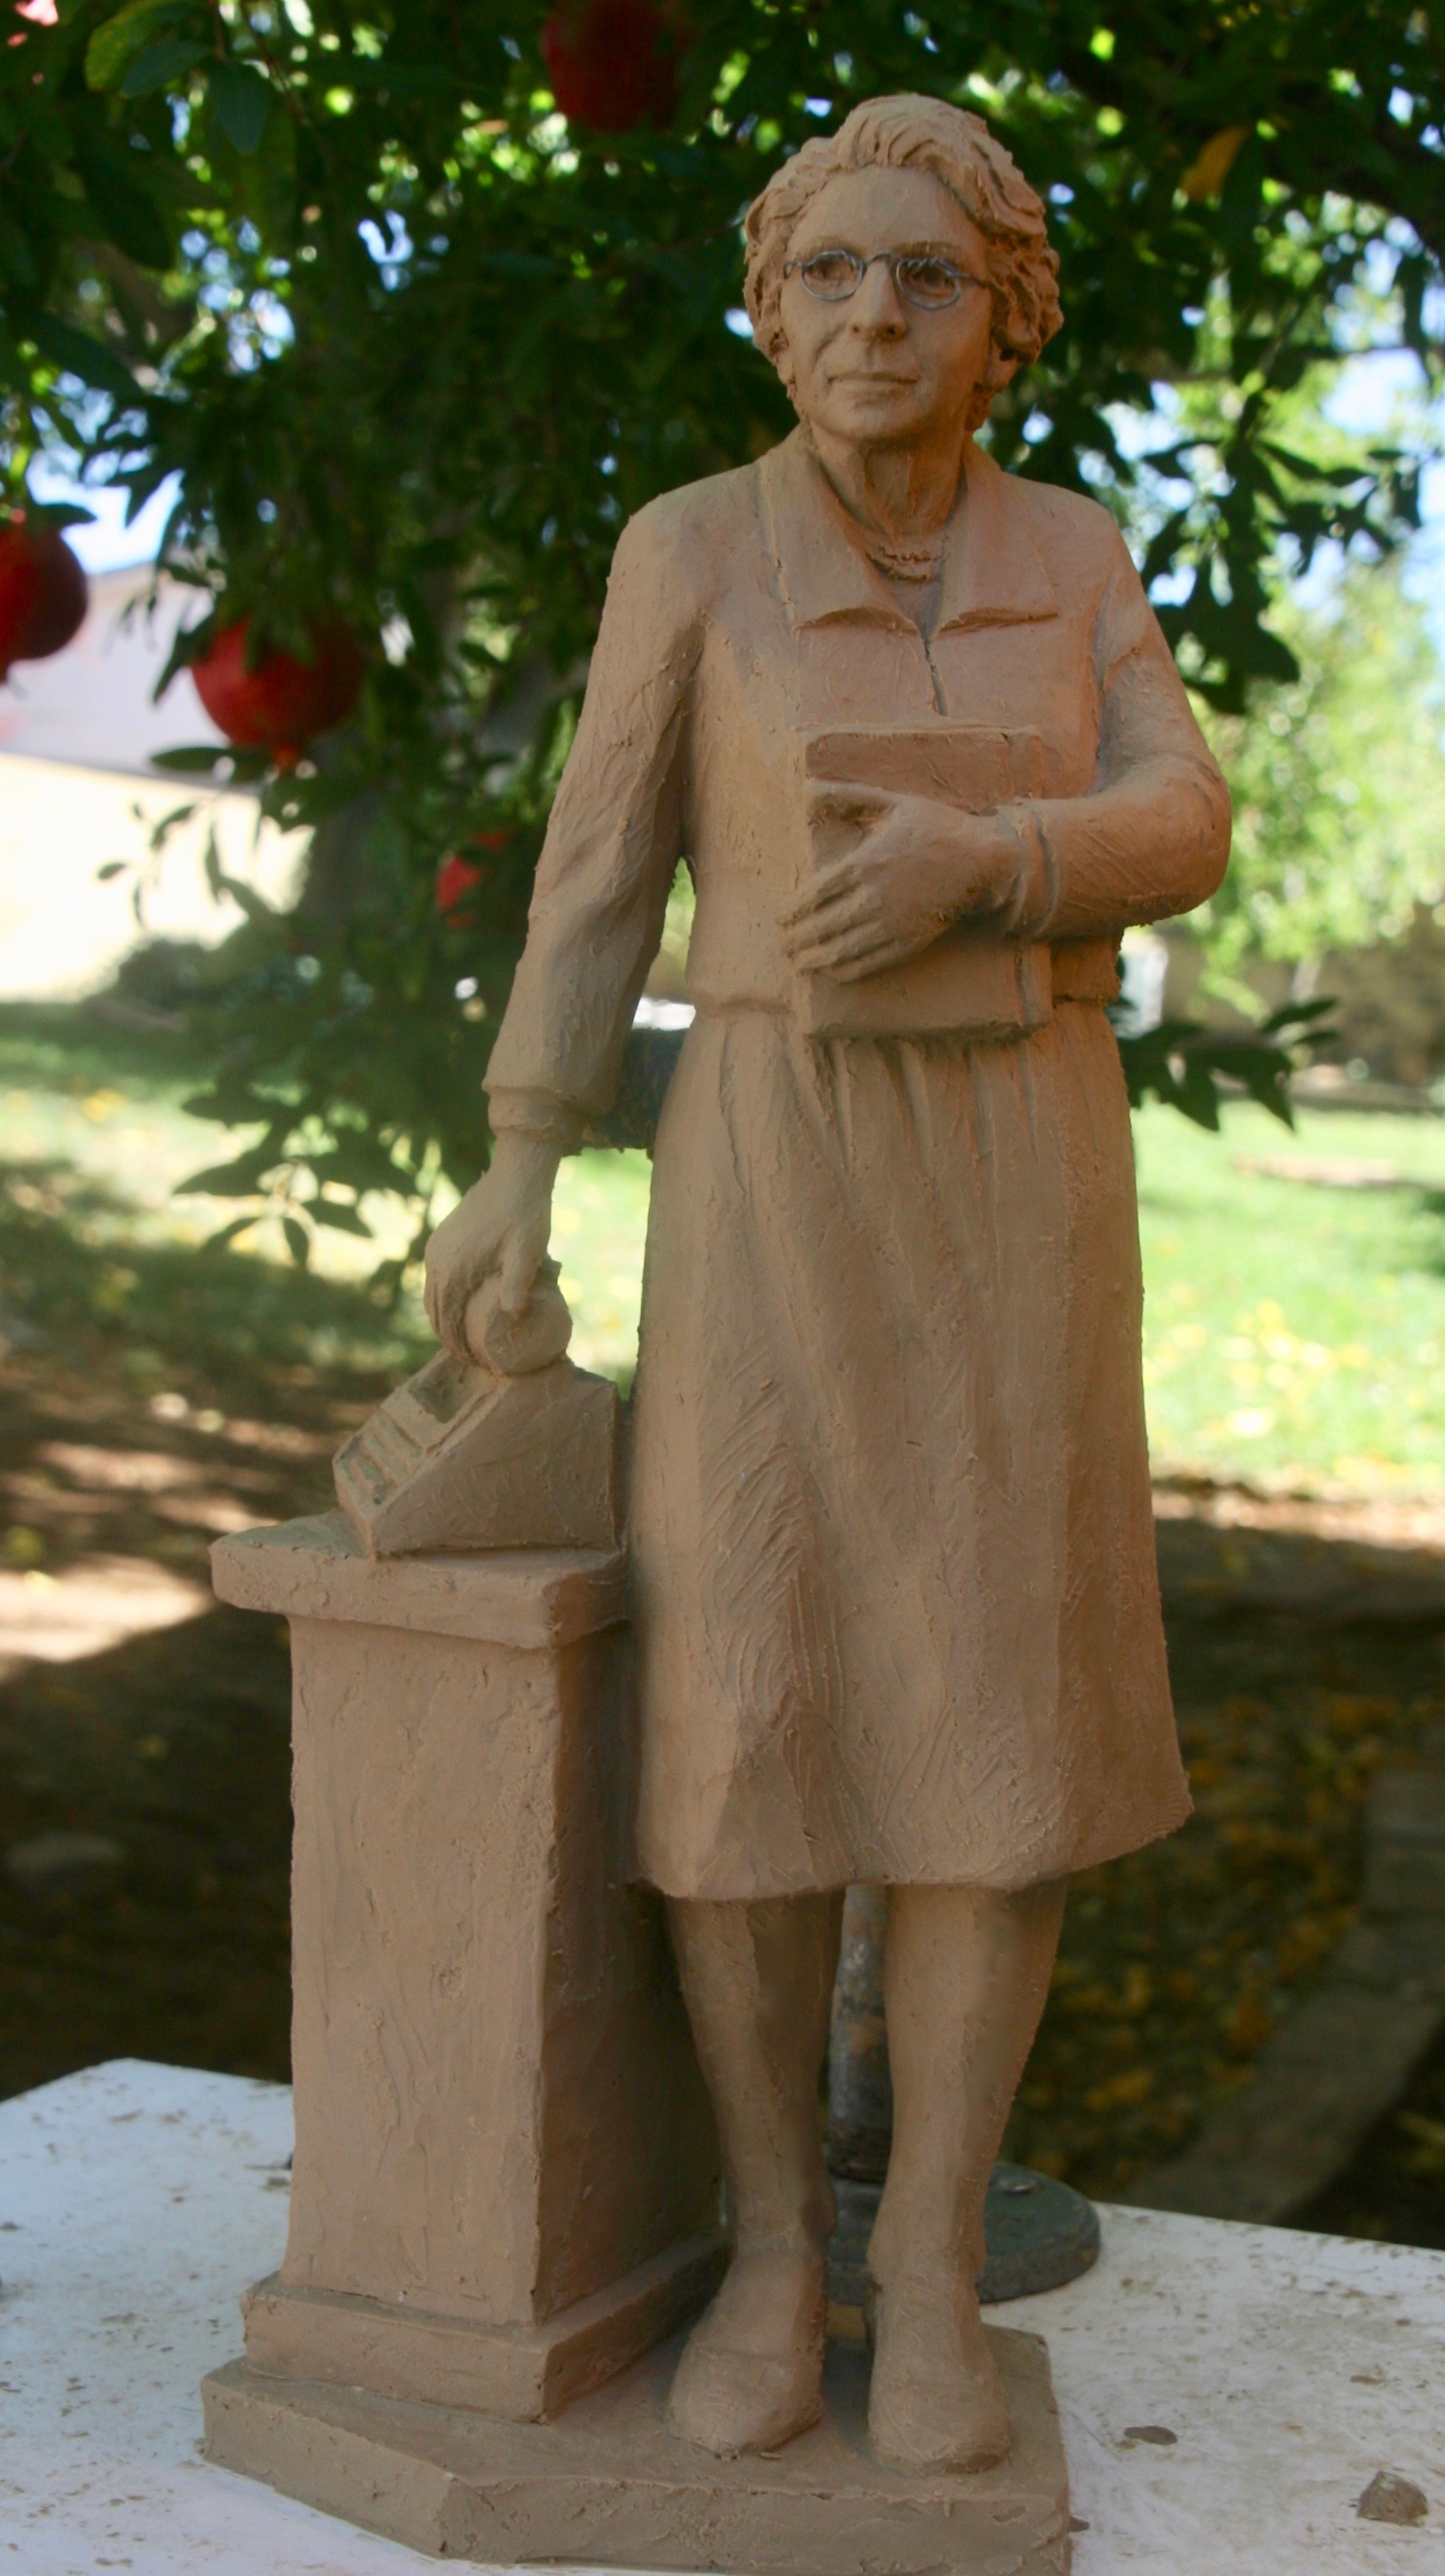 Maquette of the Juanita Brooks statue